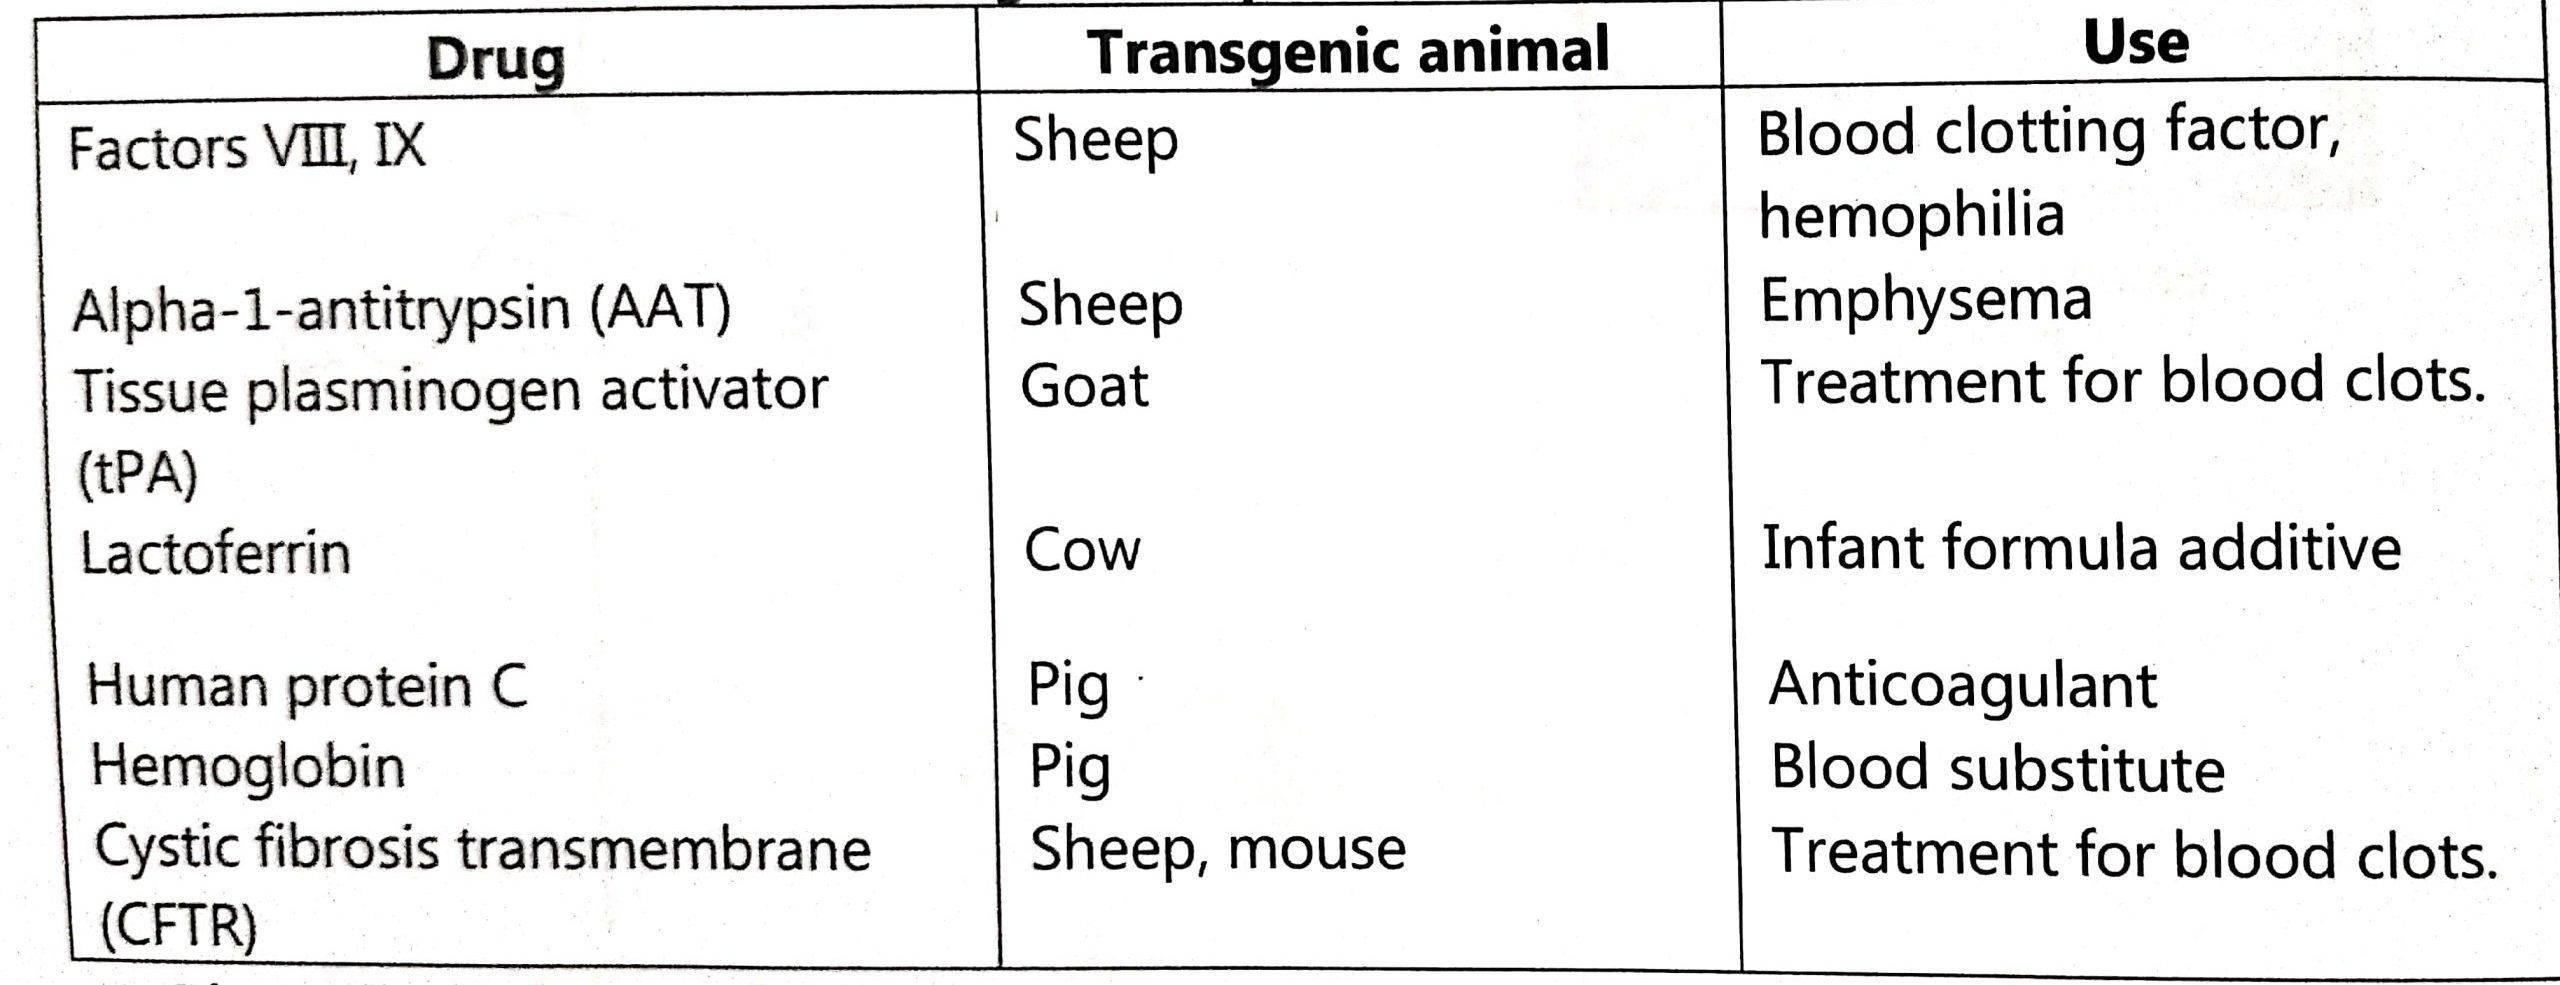 Applications of transgenic animals